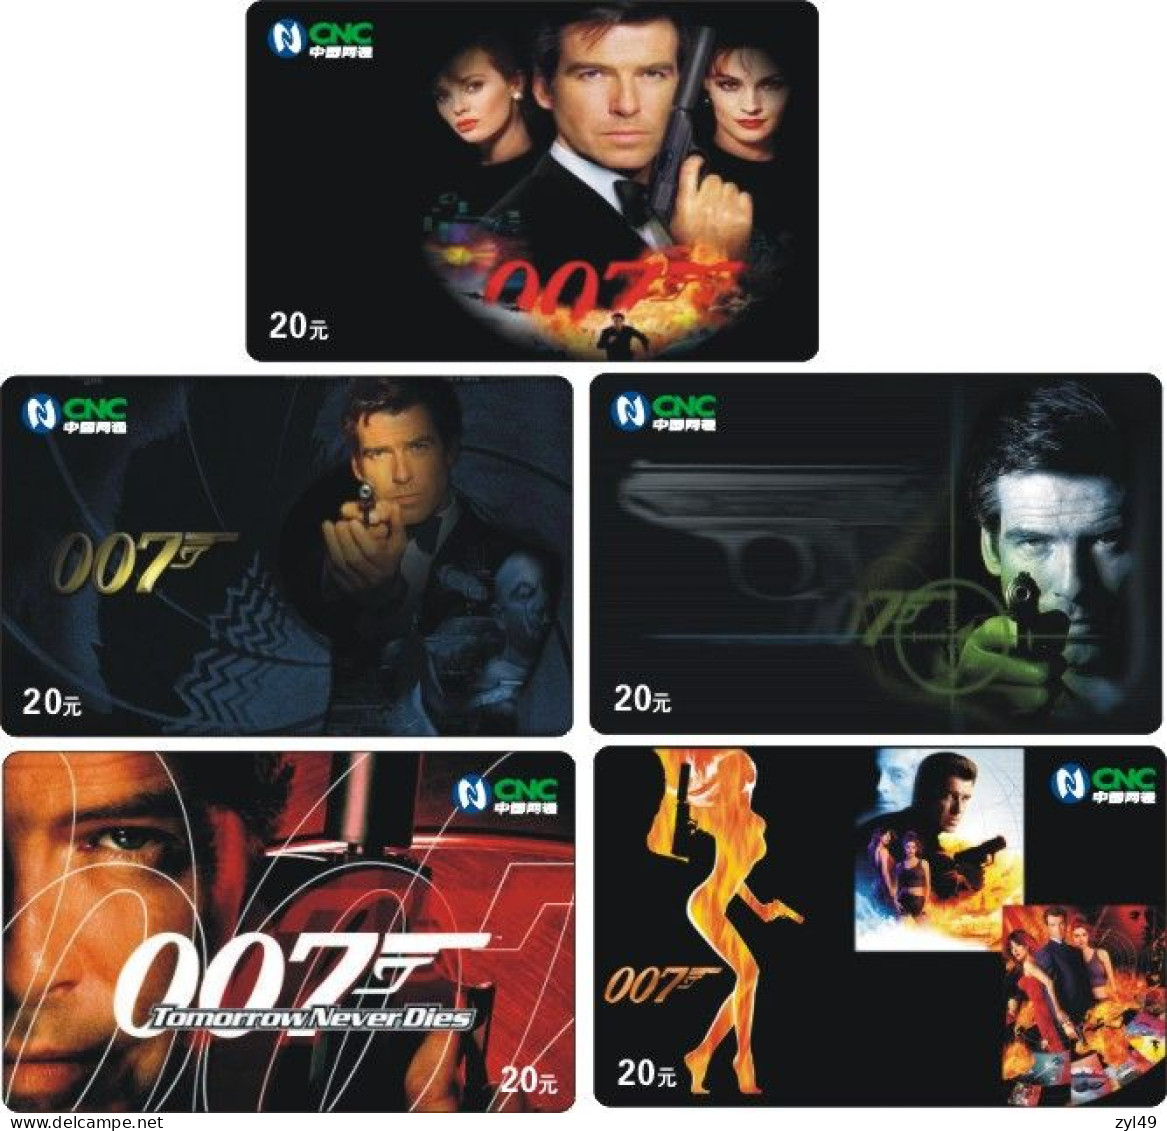 M13020 China Phone Cards James Bond 007 83pcs - Cine